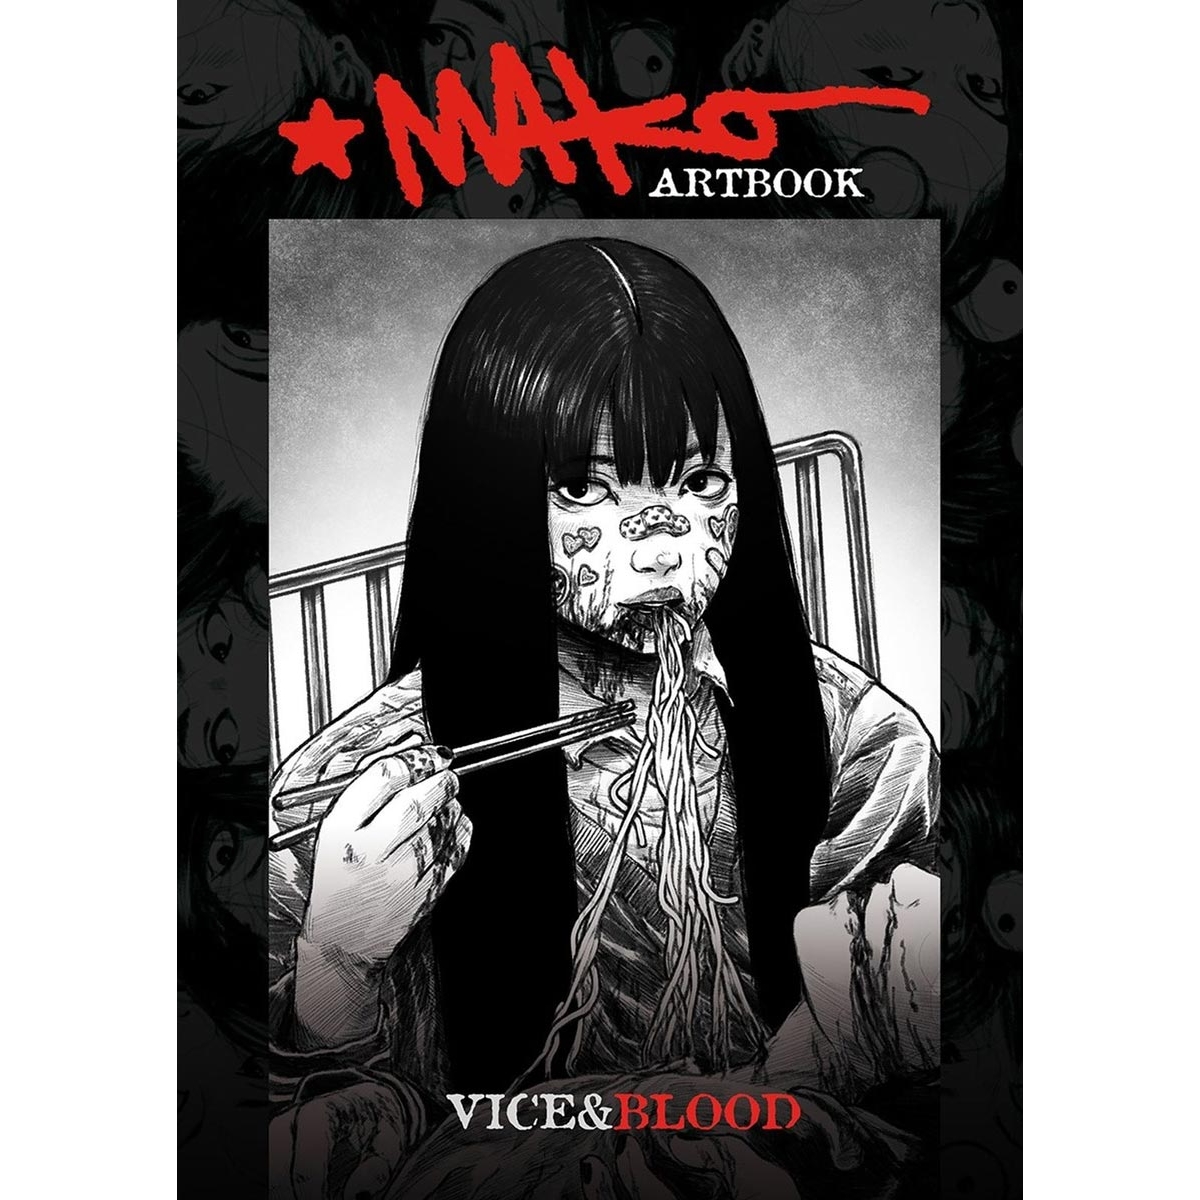 Mako Artbook Vice & Blood